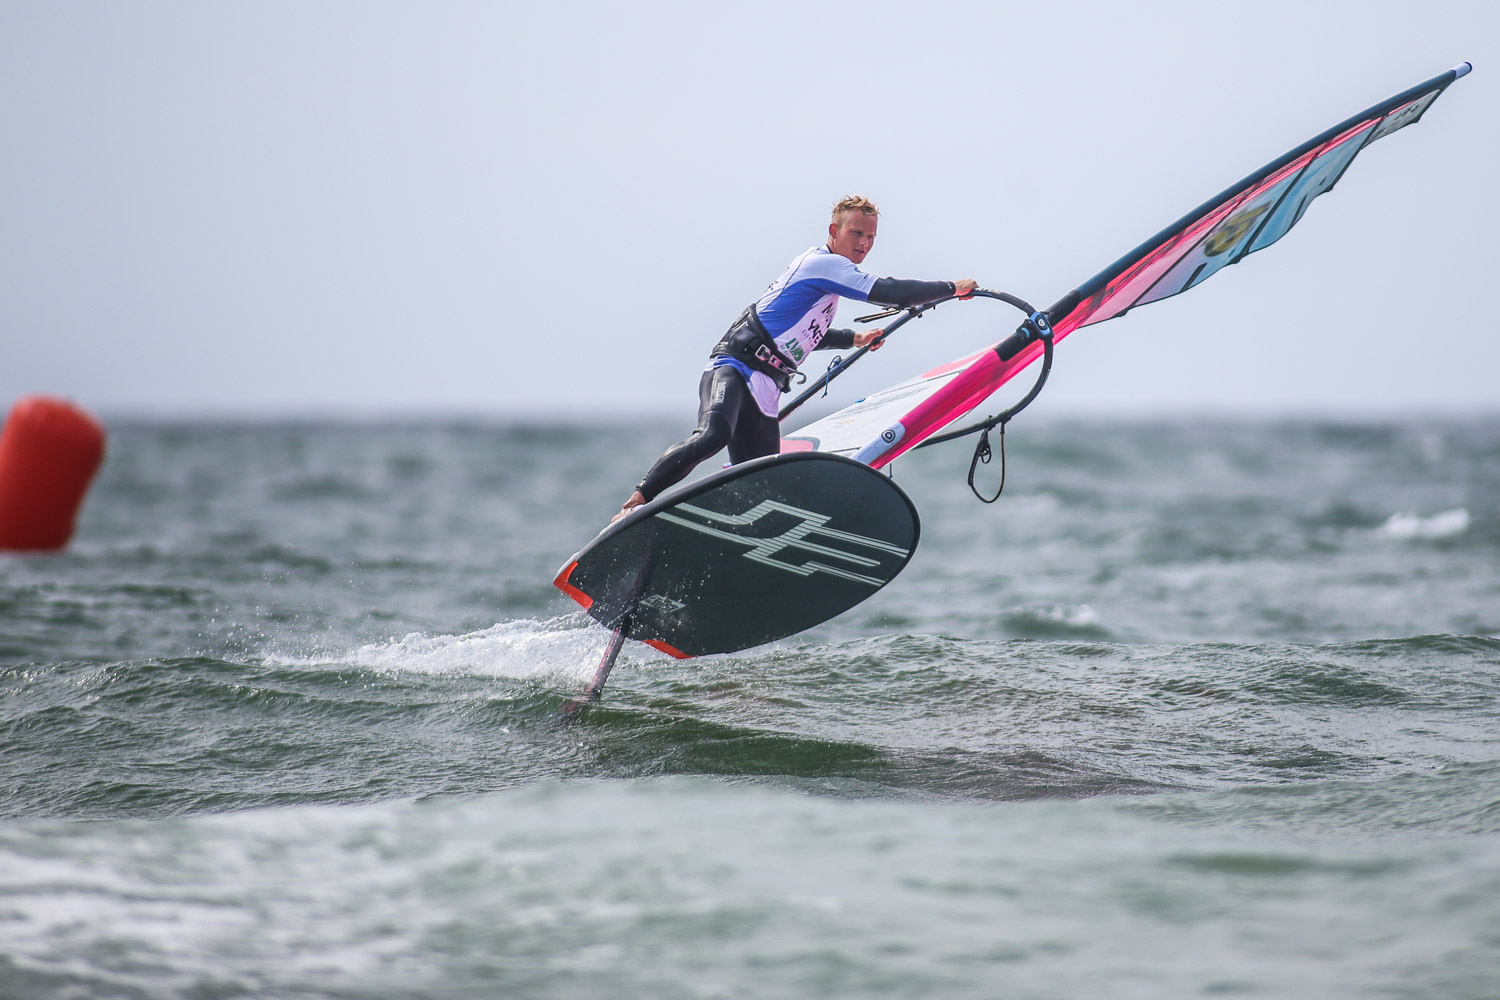 Internationale Deutsche Meisterschaft - Windsurf Cup Sylt 2017